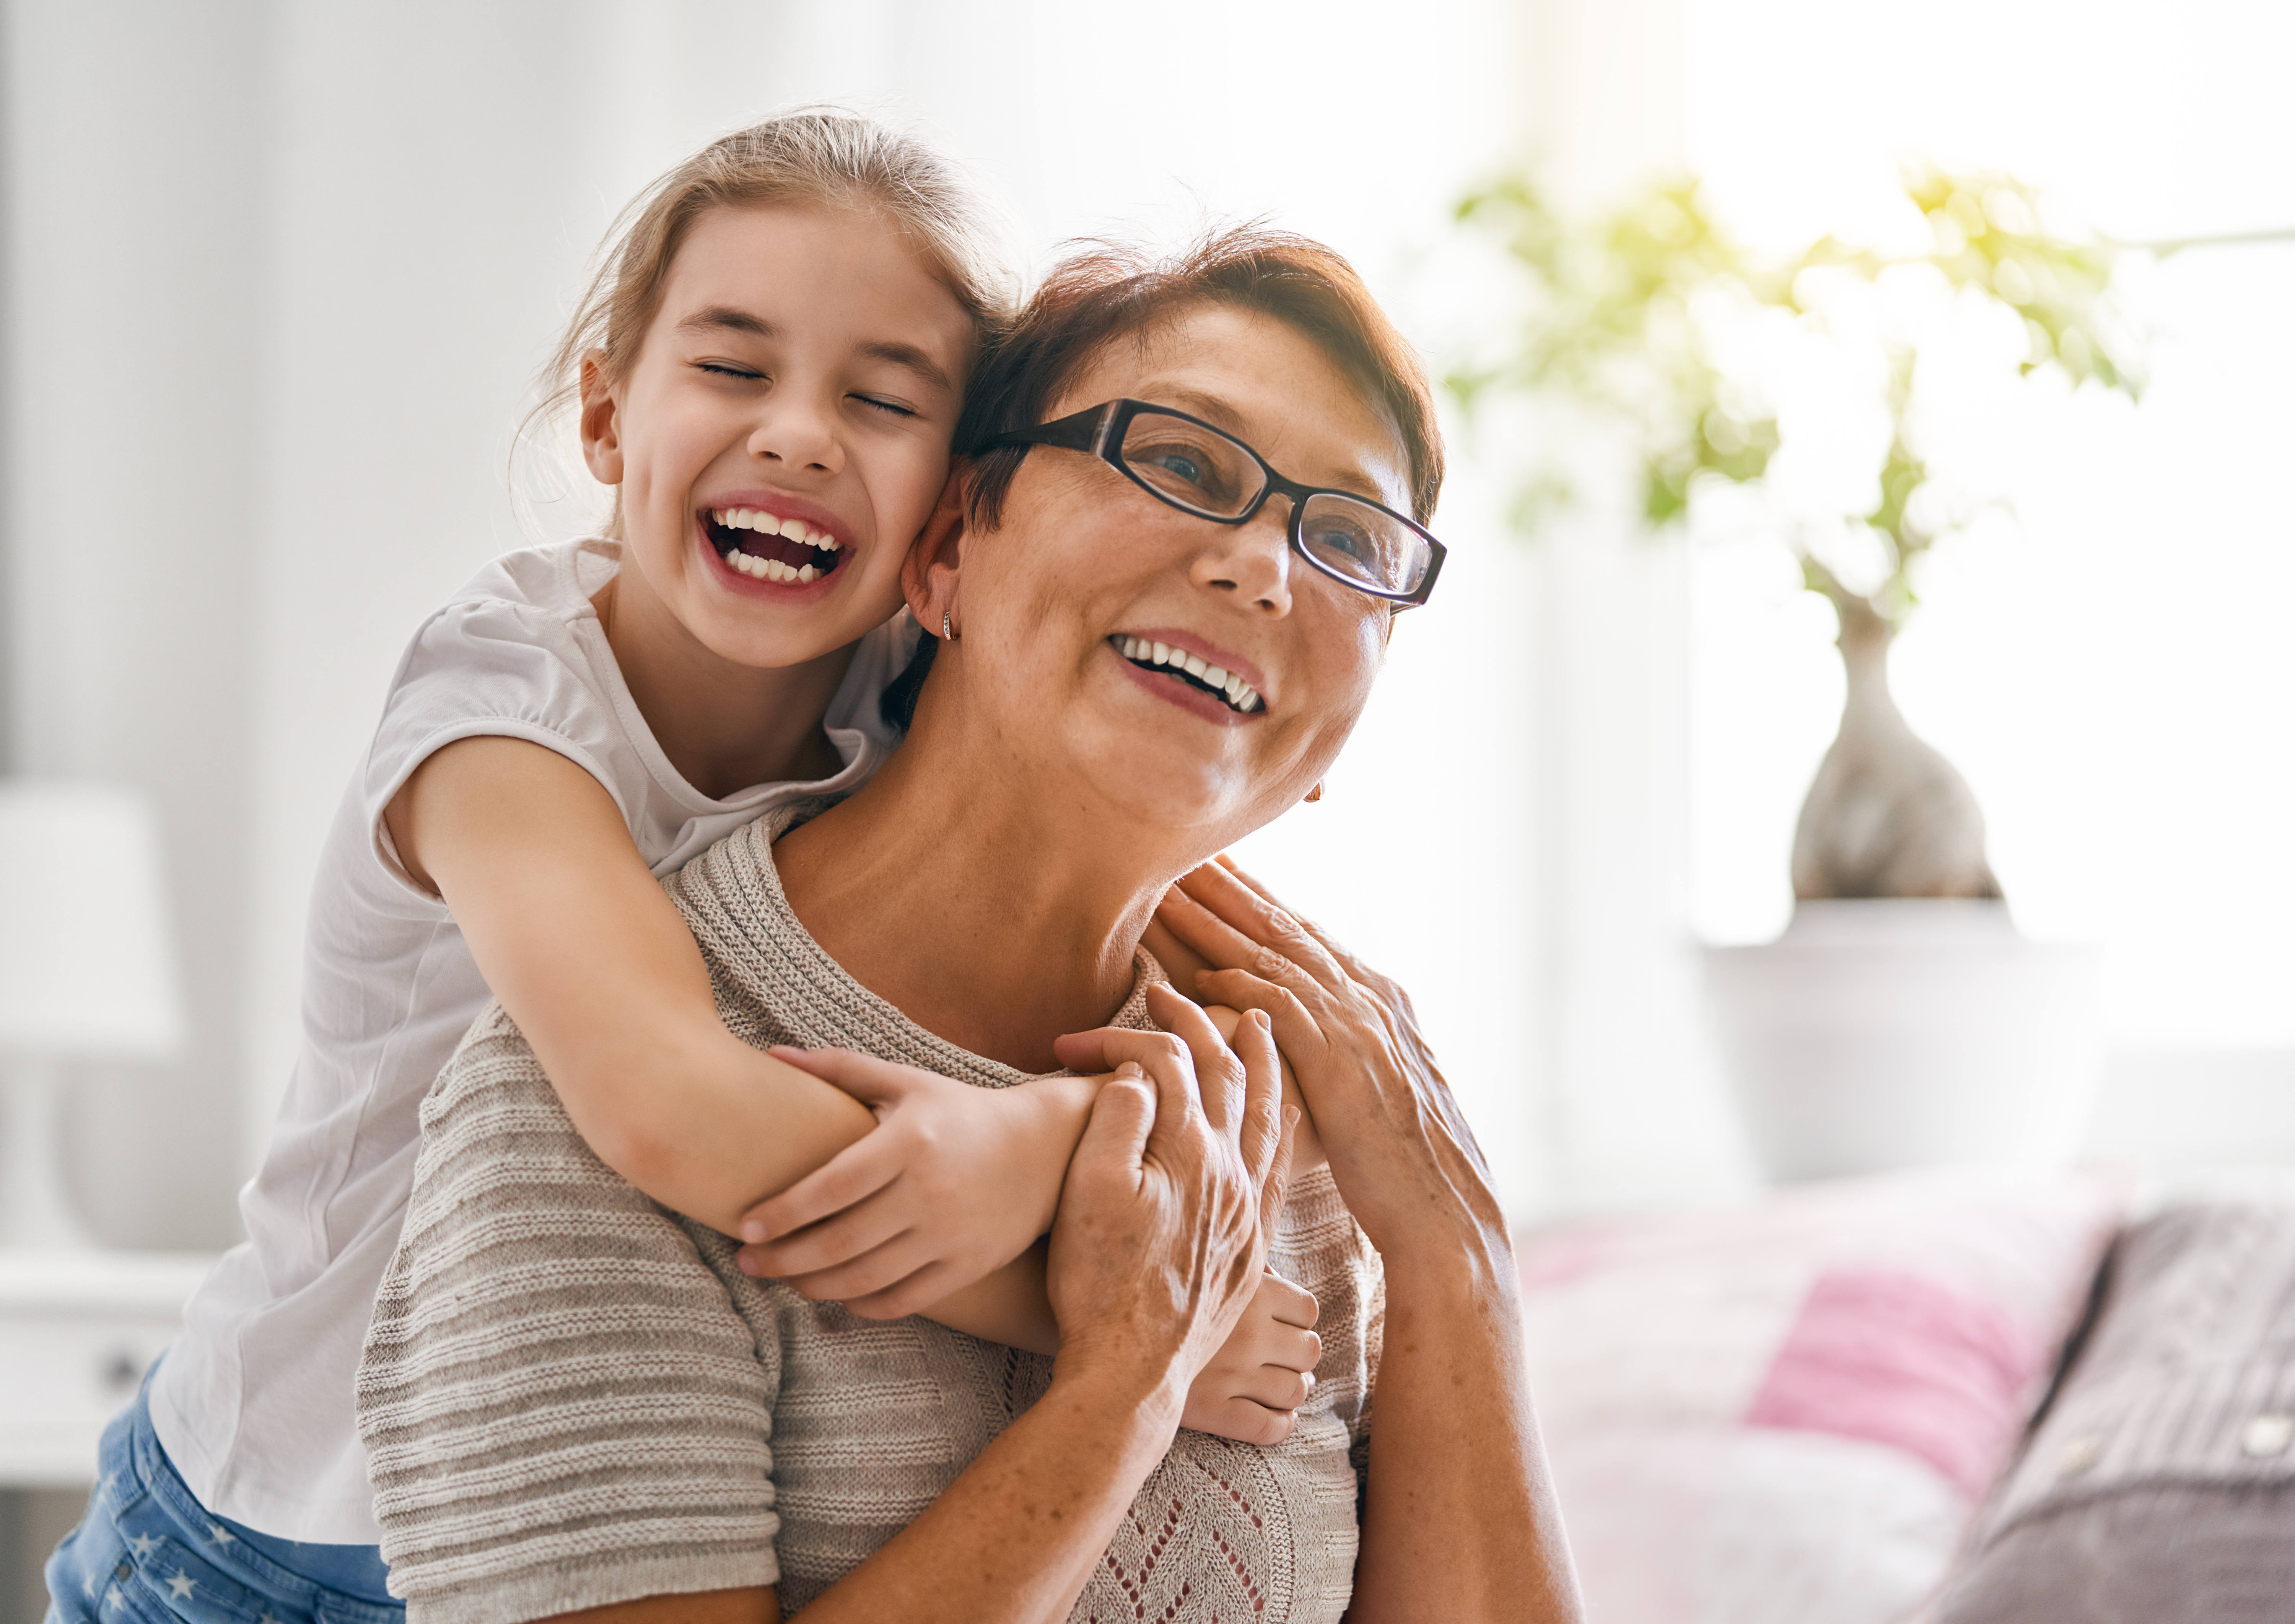 Une petite fille et sa grand-mère souriantes | Source : Shutterstock